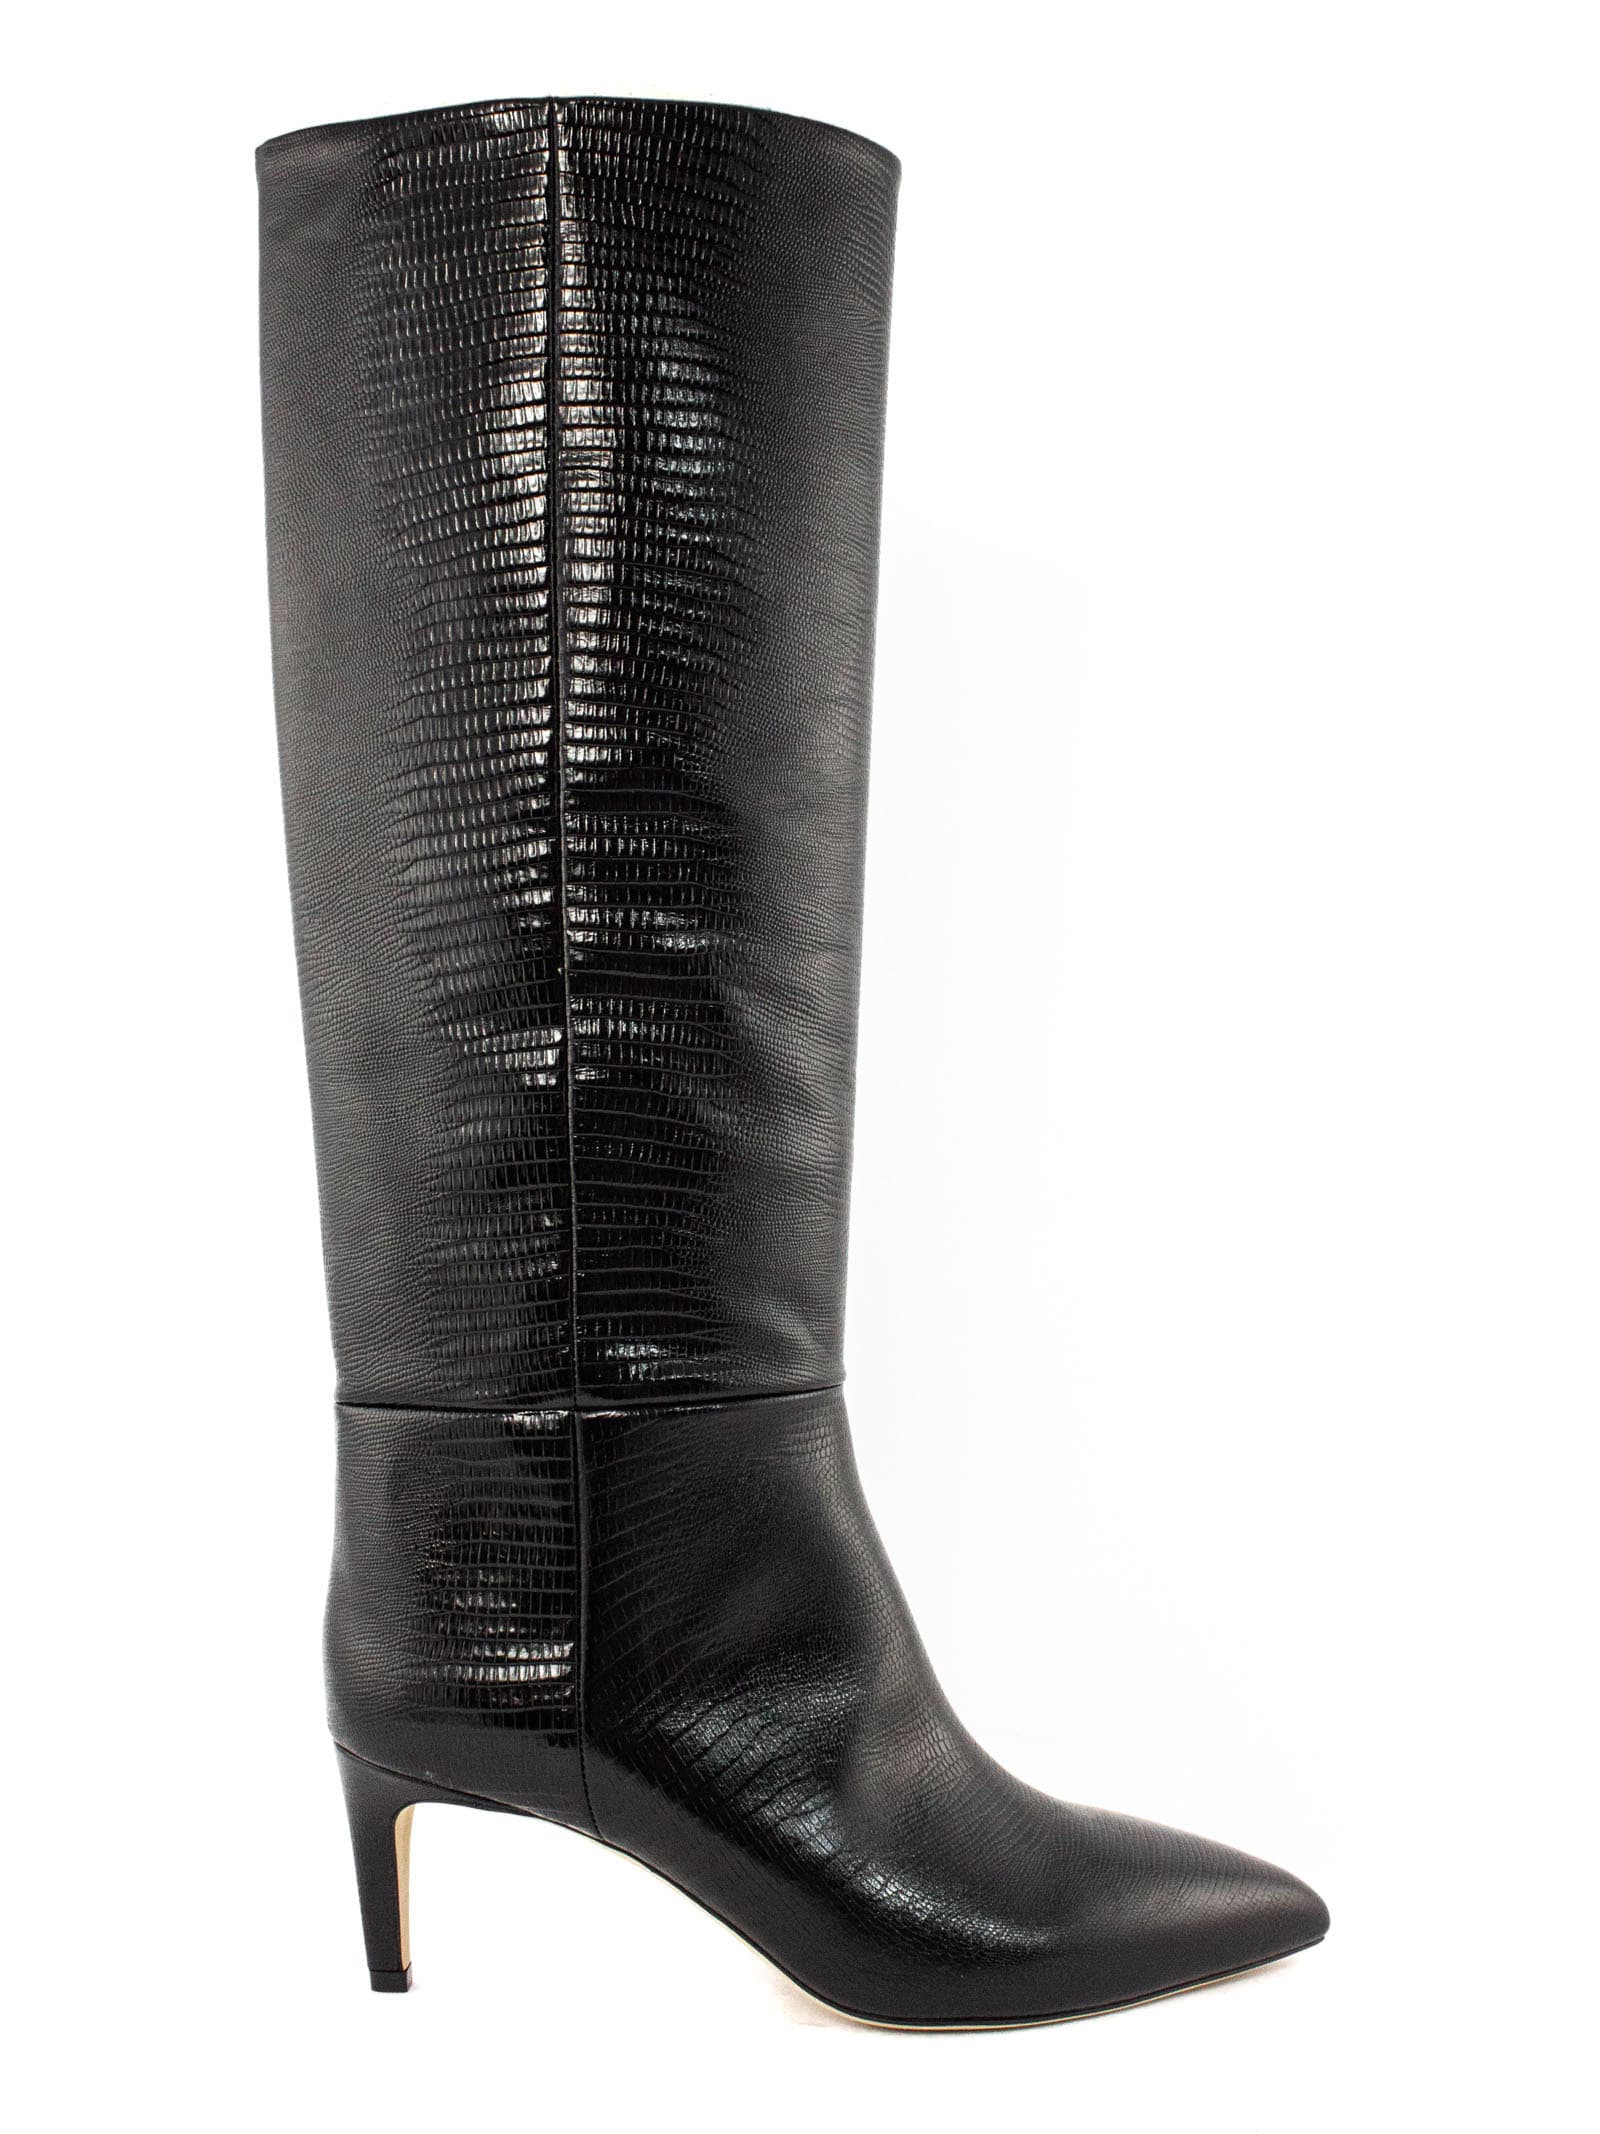 Paris Texas Black Leather High Boots